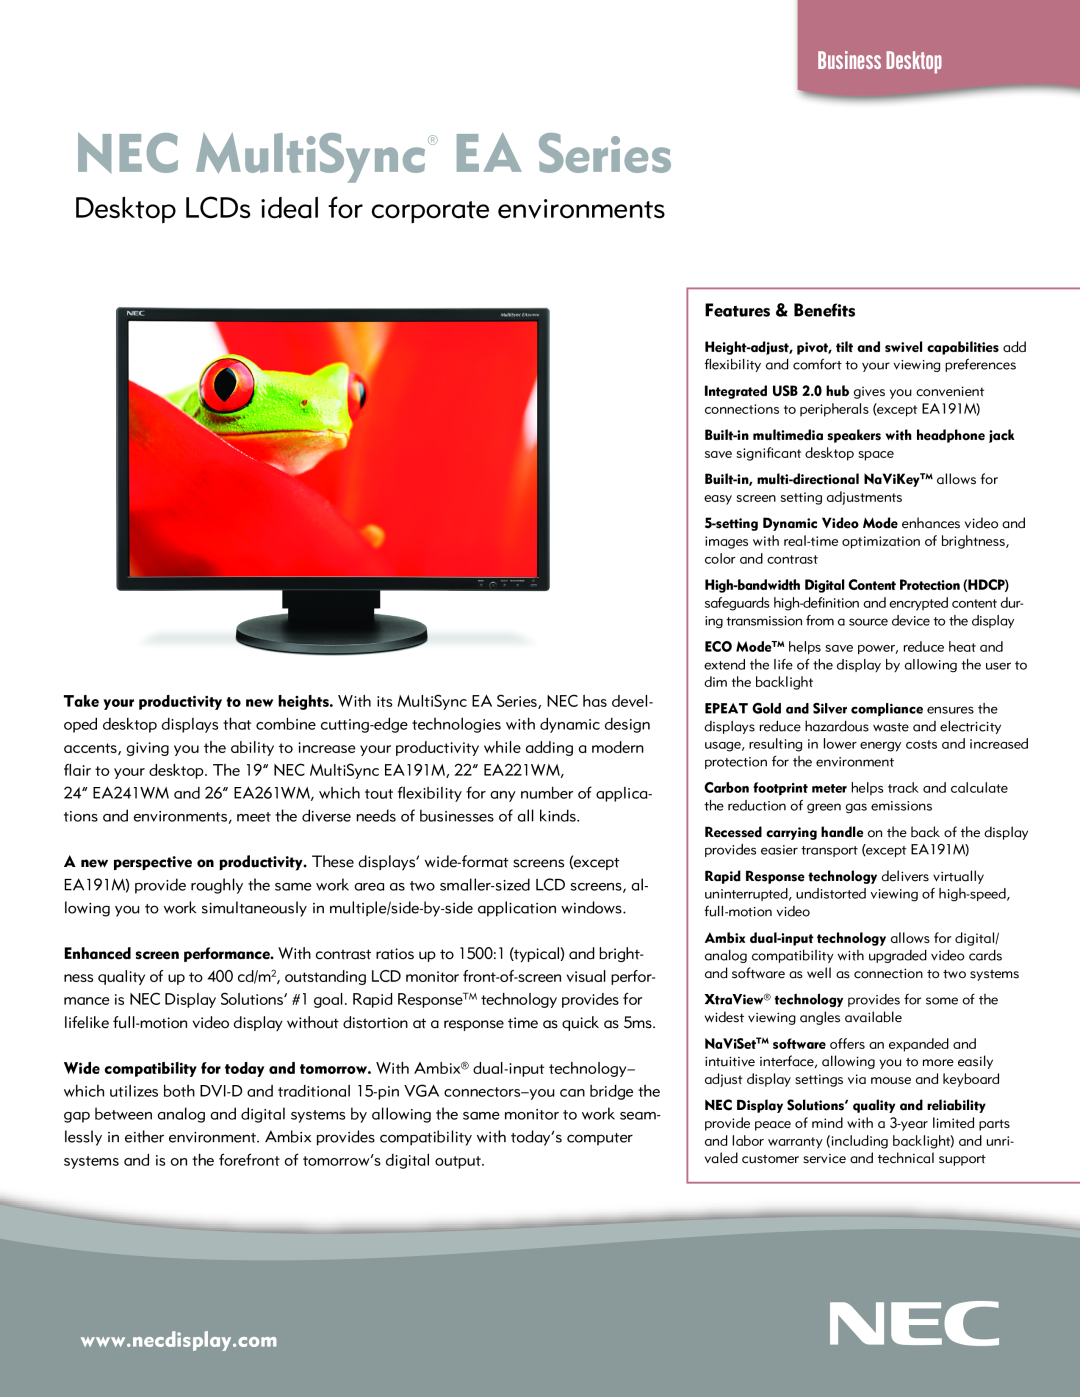 NEC EA191M, EA221WM warranty Features & Benefits, NEC MultiSync EA Series, Desktop LCDs ideal for corporate environments 